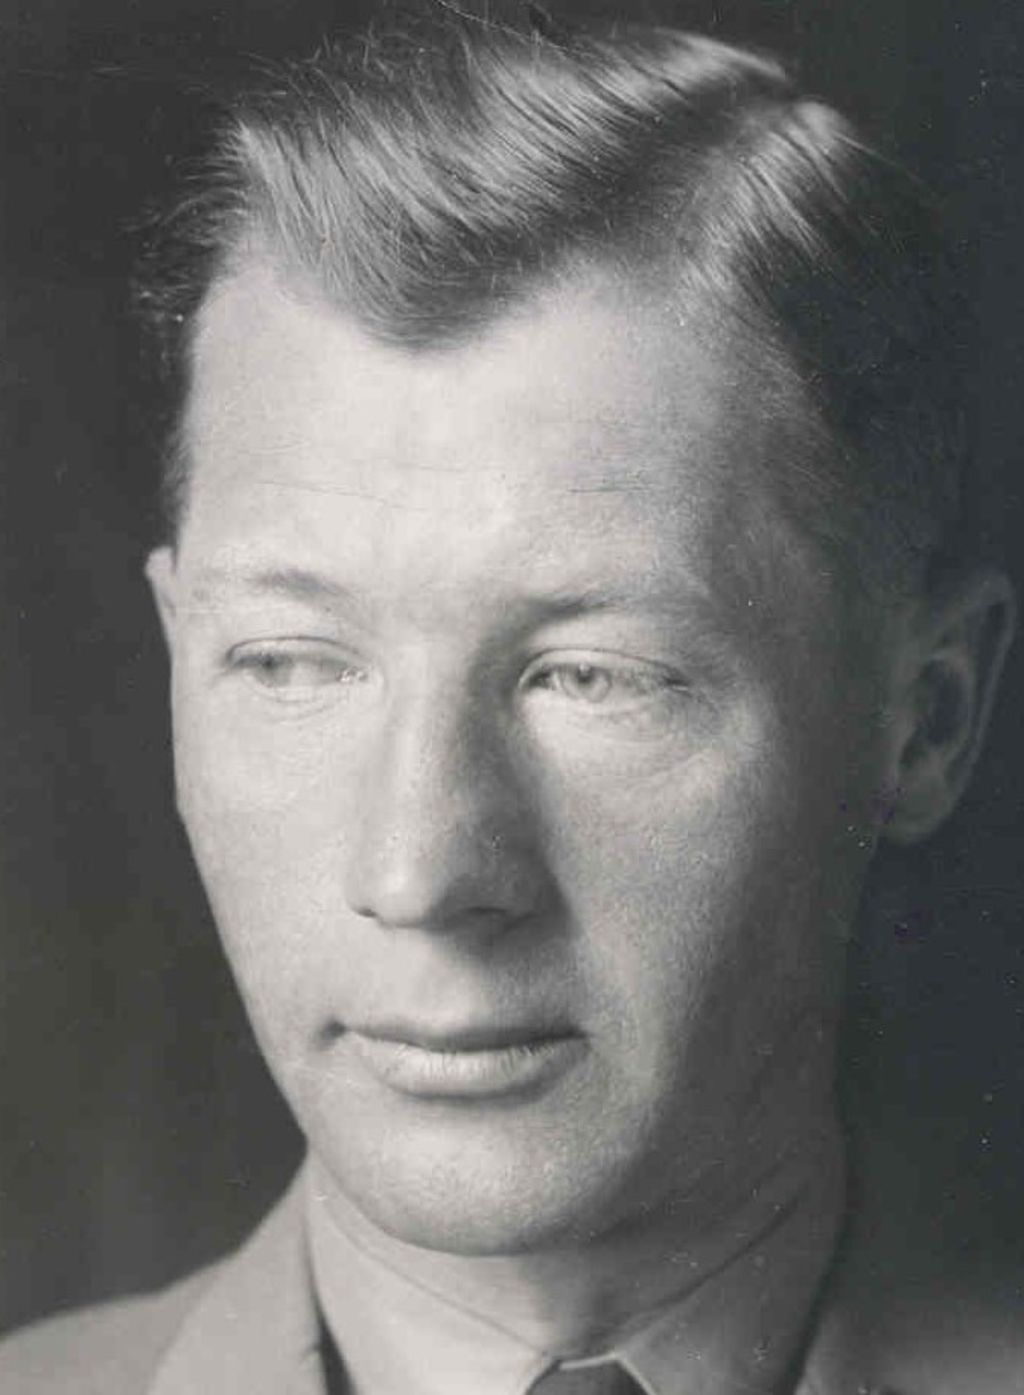 Foto: Josef Terboven, um 1940